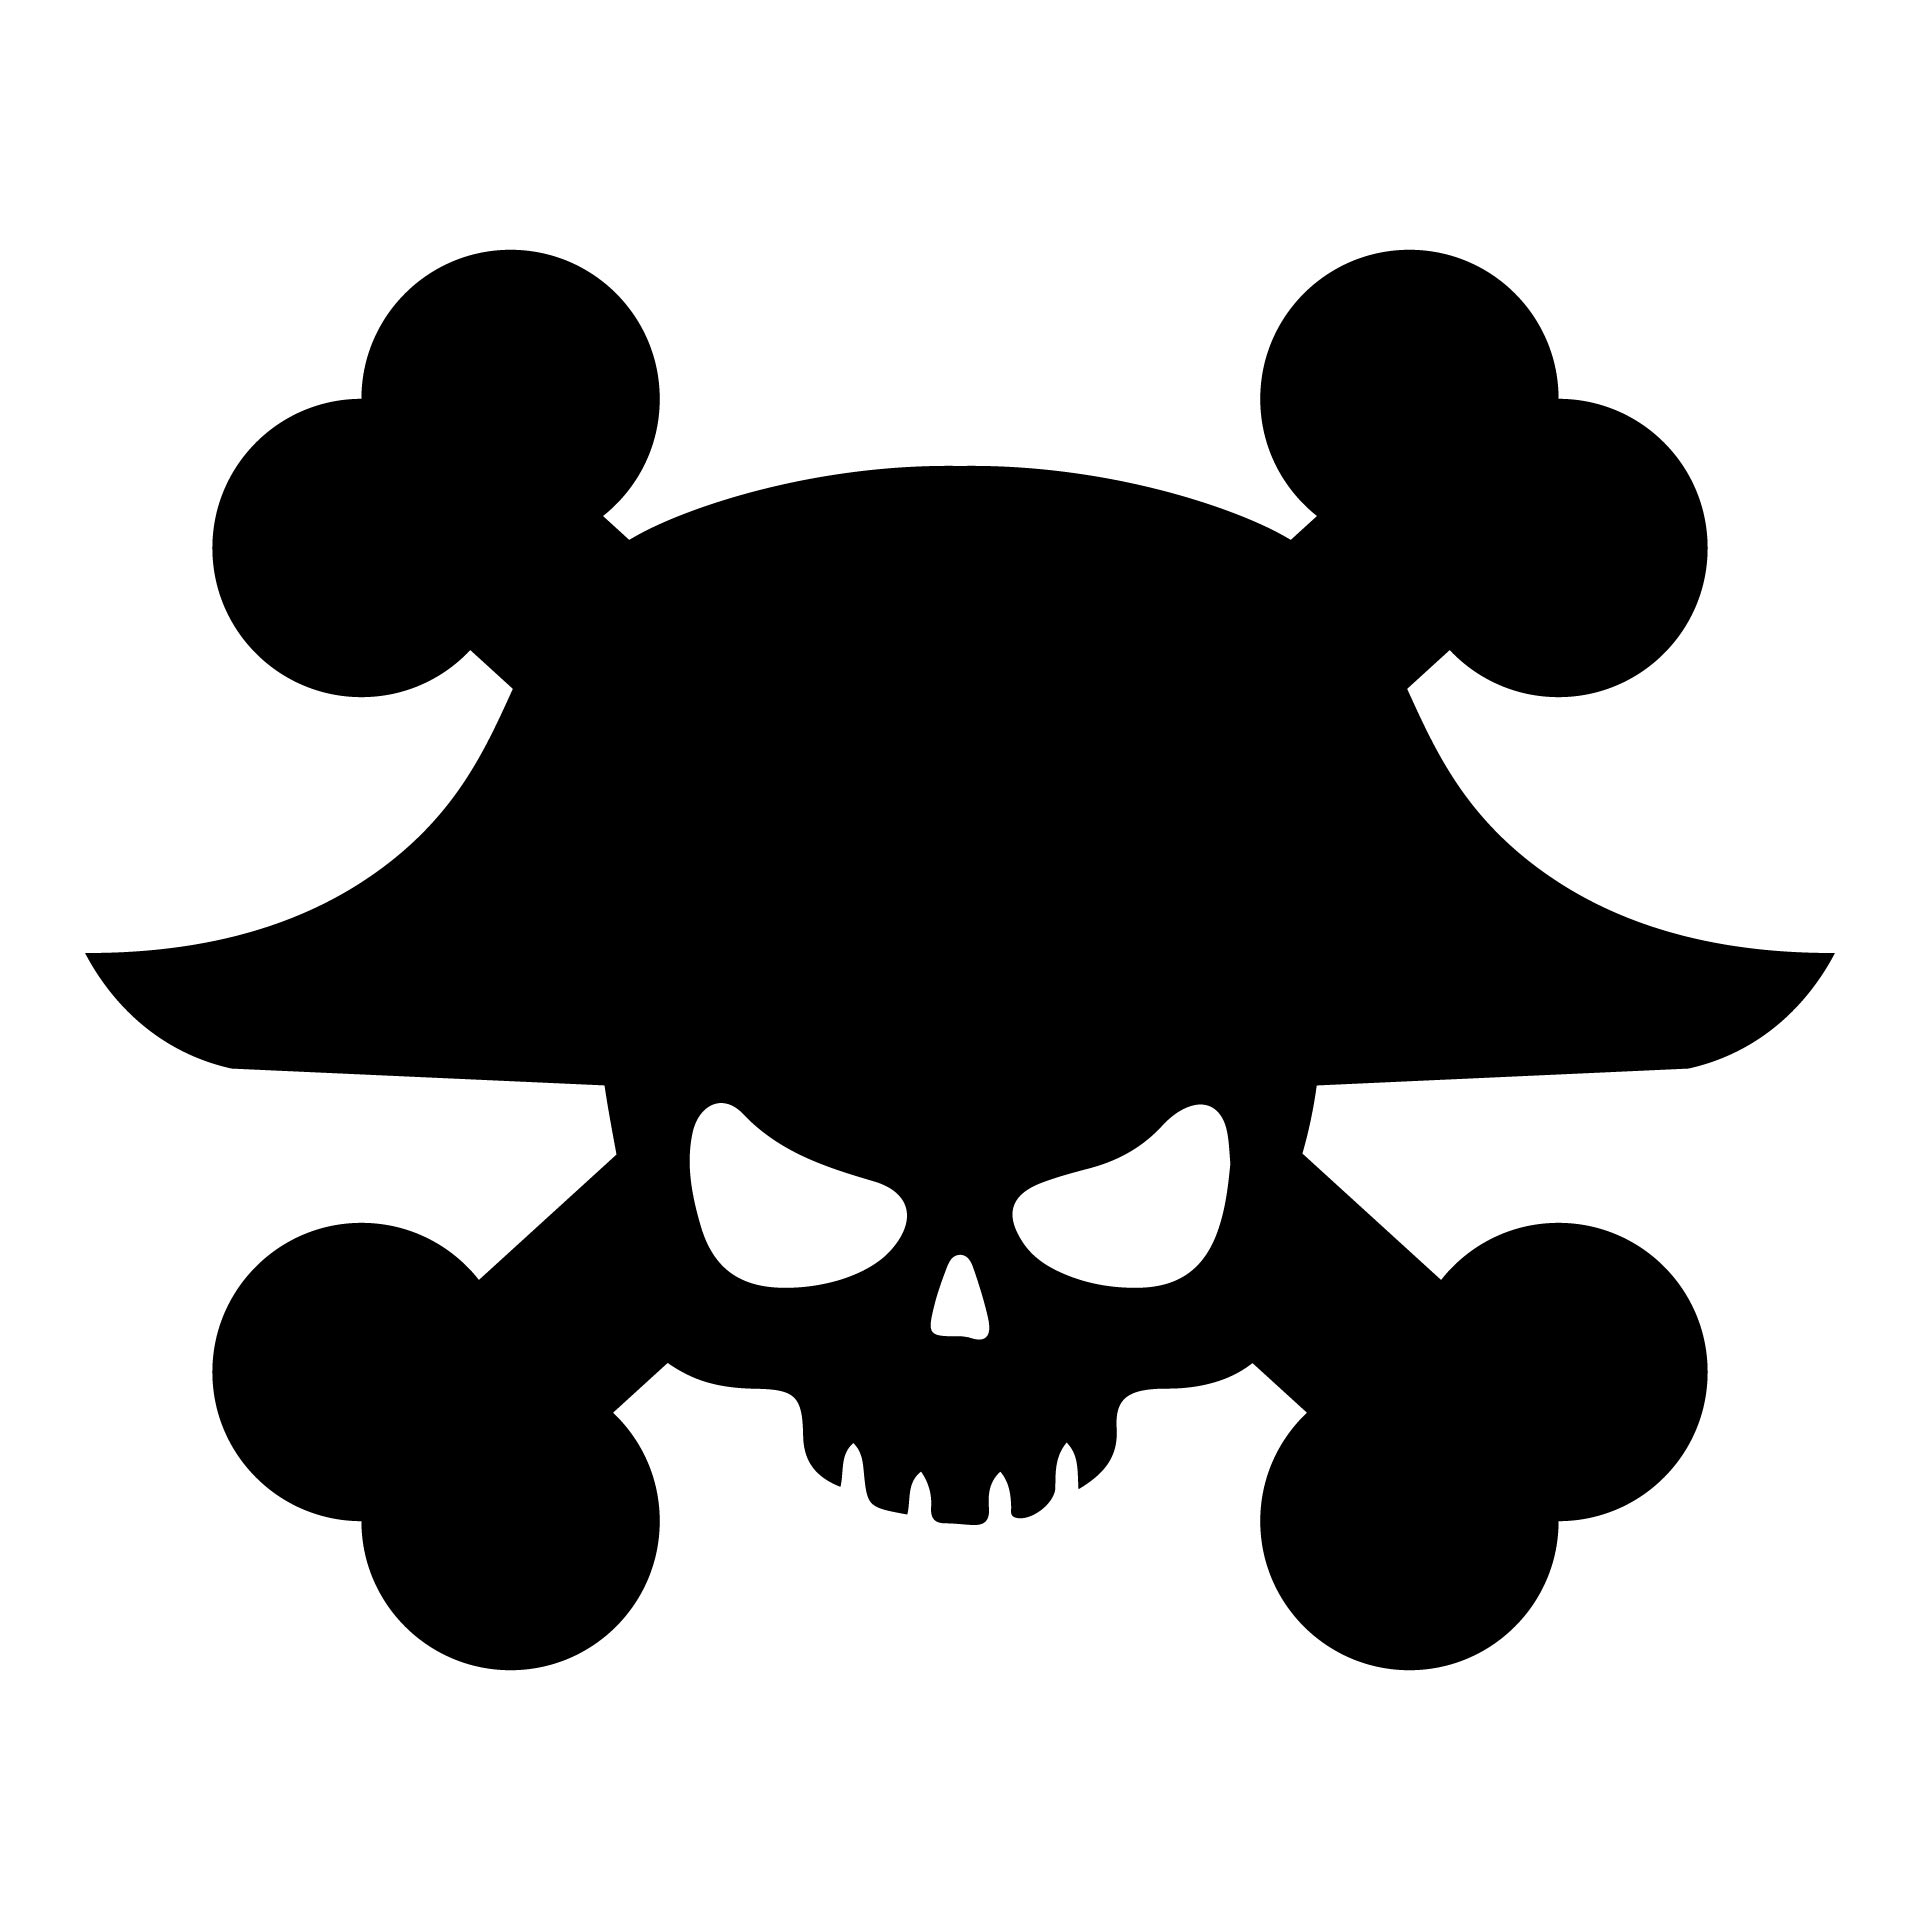 Pirate Skull Pumpkin Carving Stencil